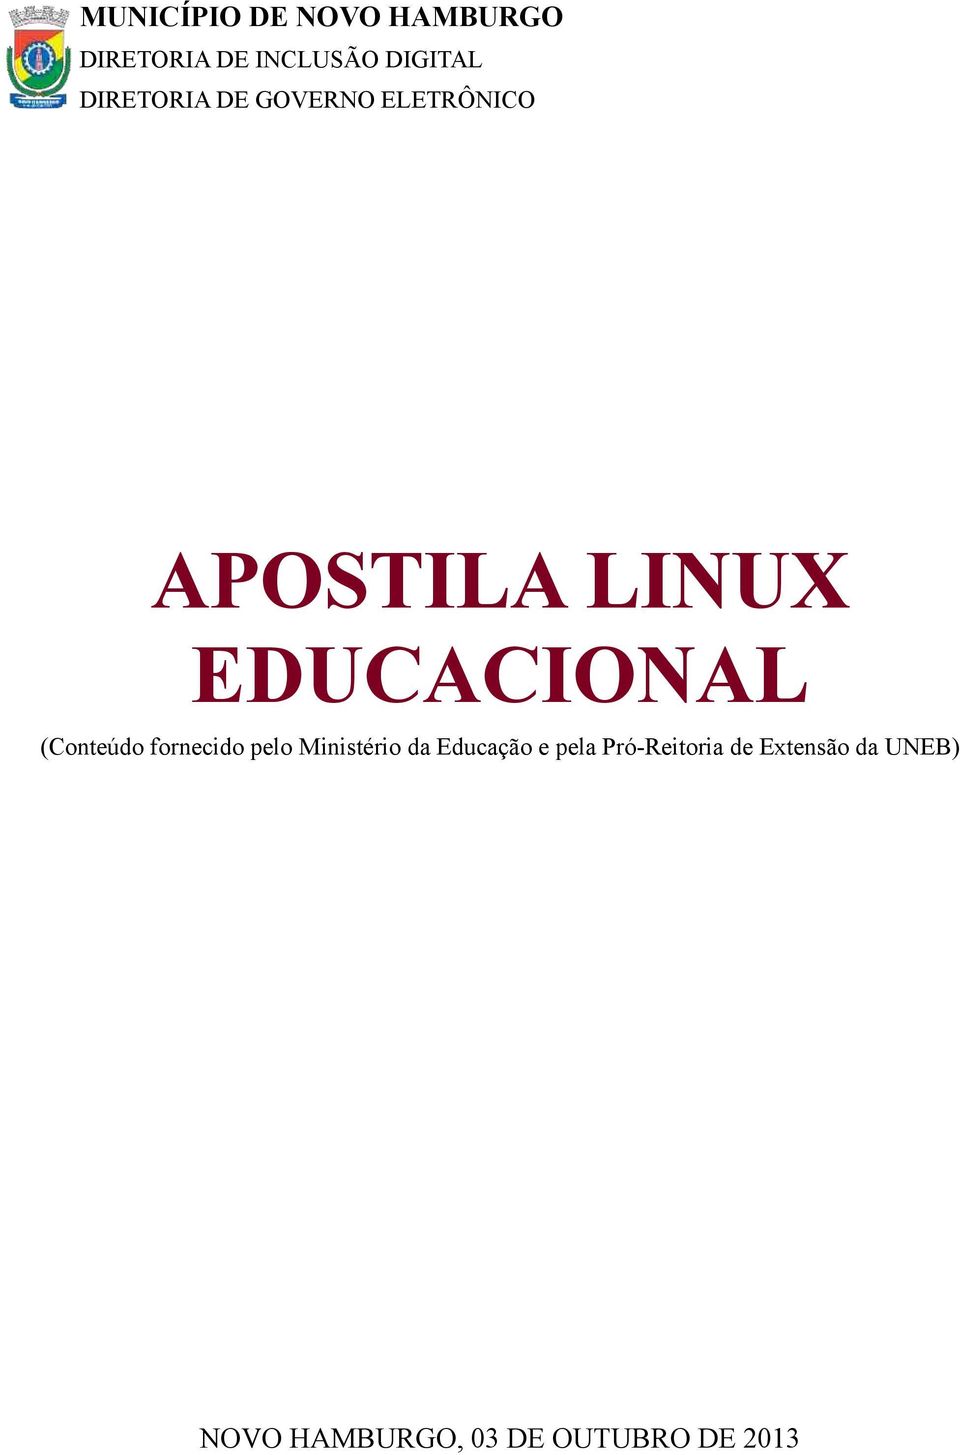 Apostila tutorial do Linux Educacional 3.0 - Parte 1